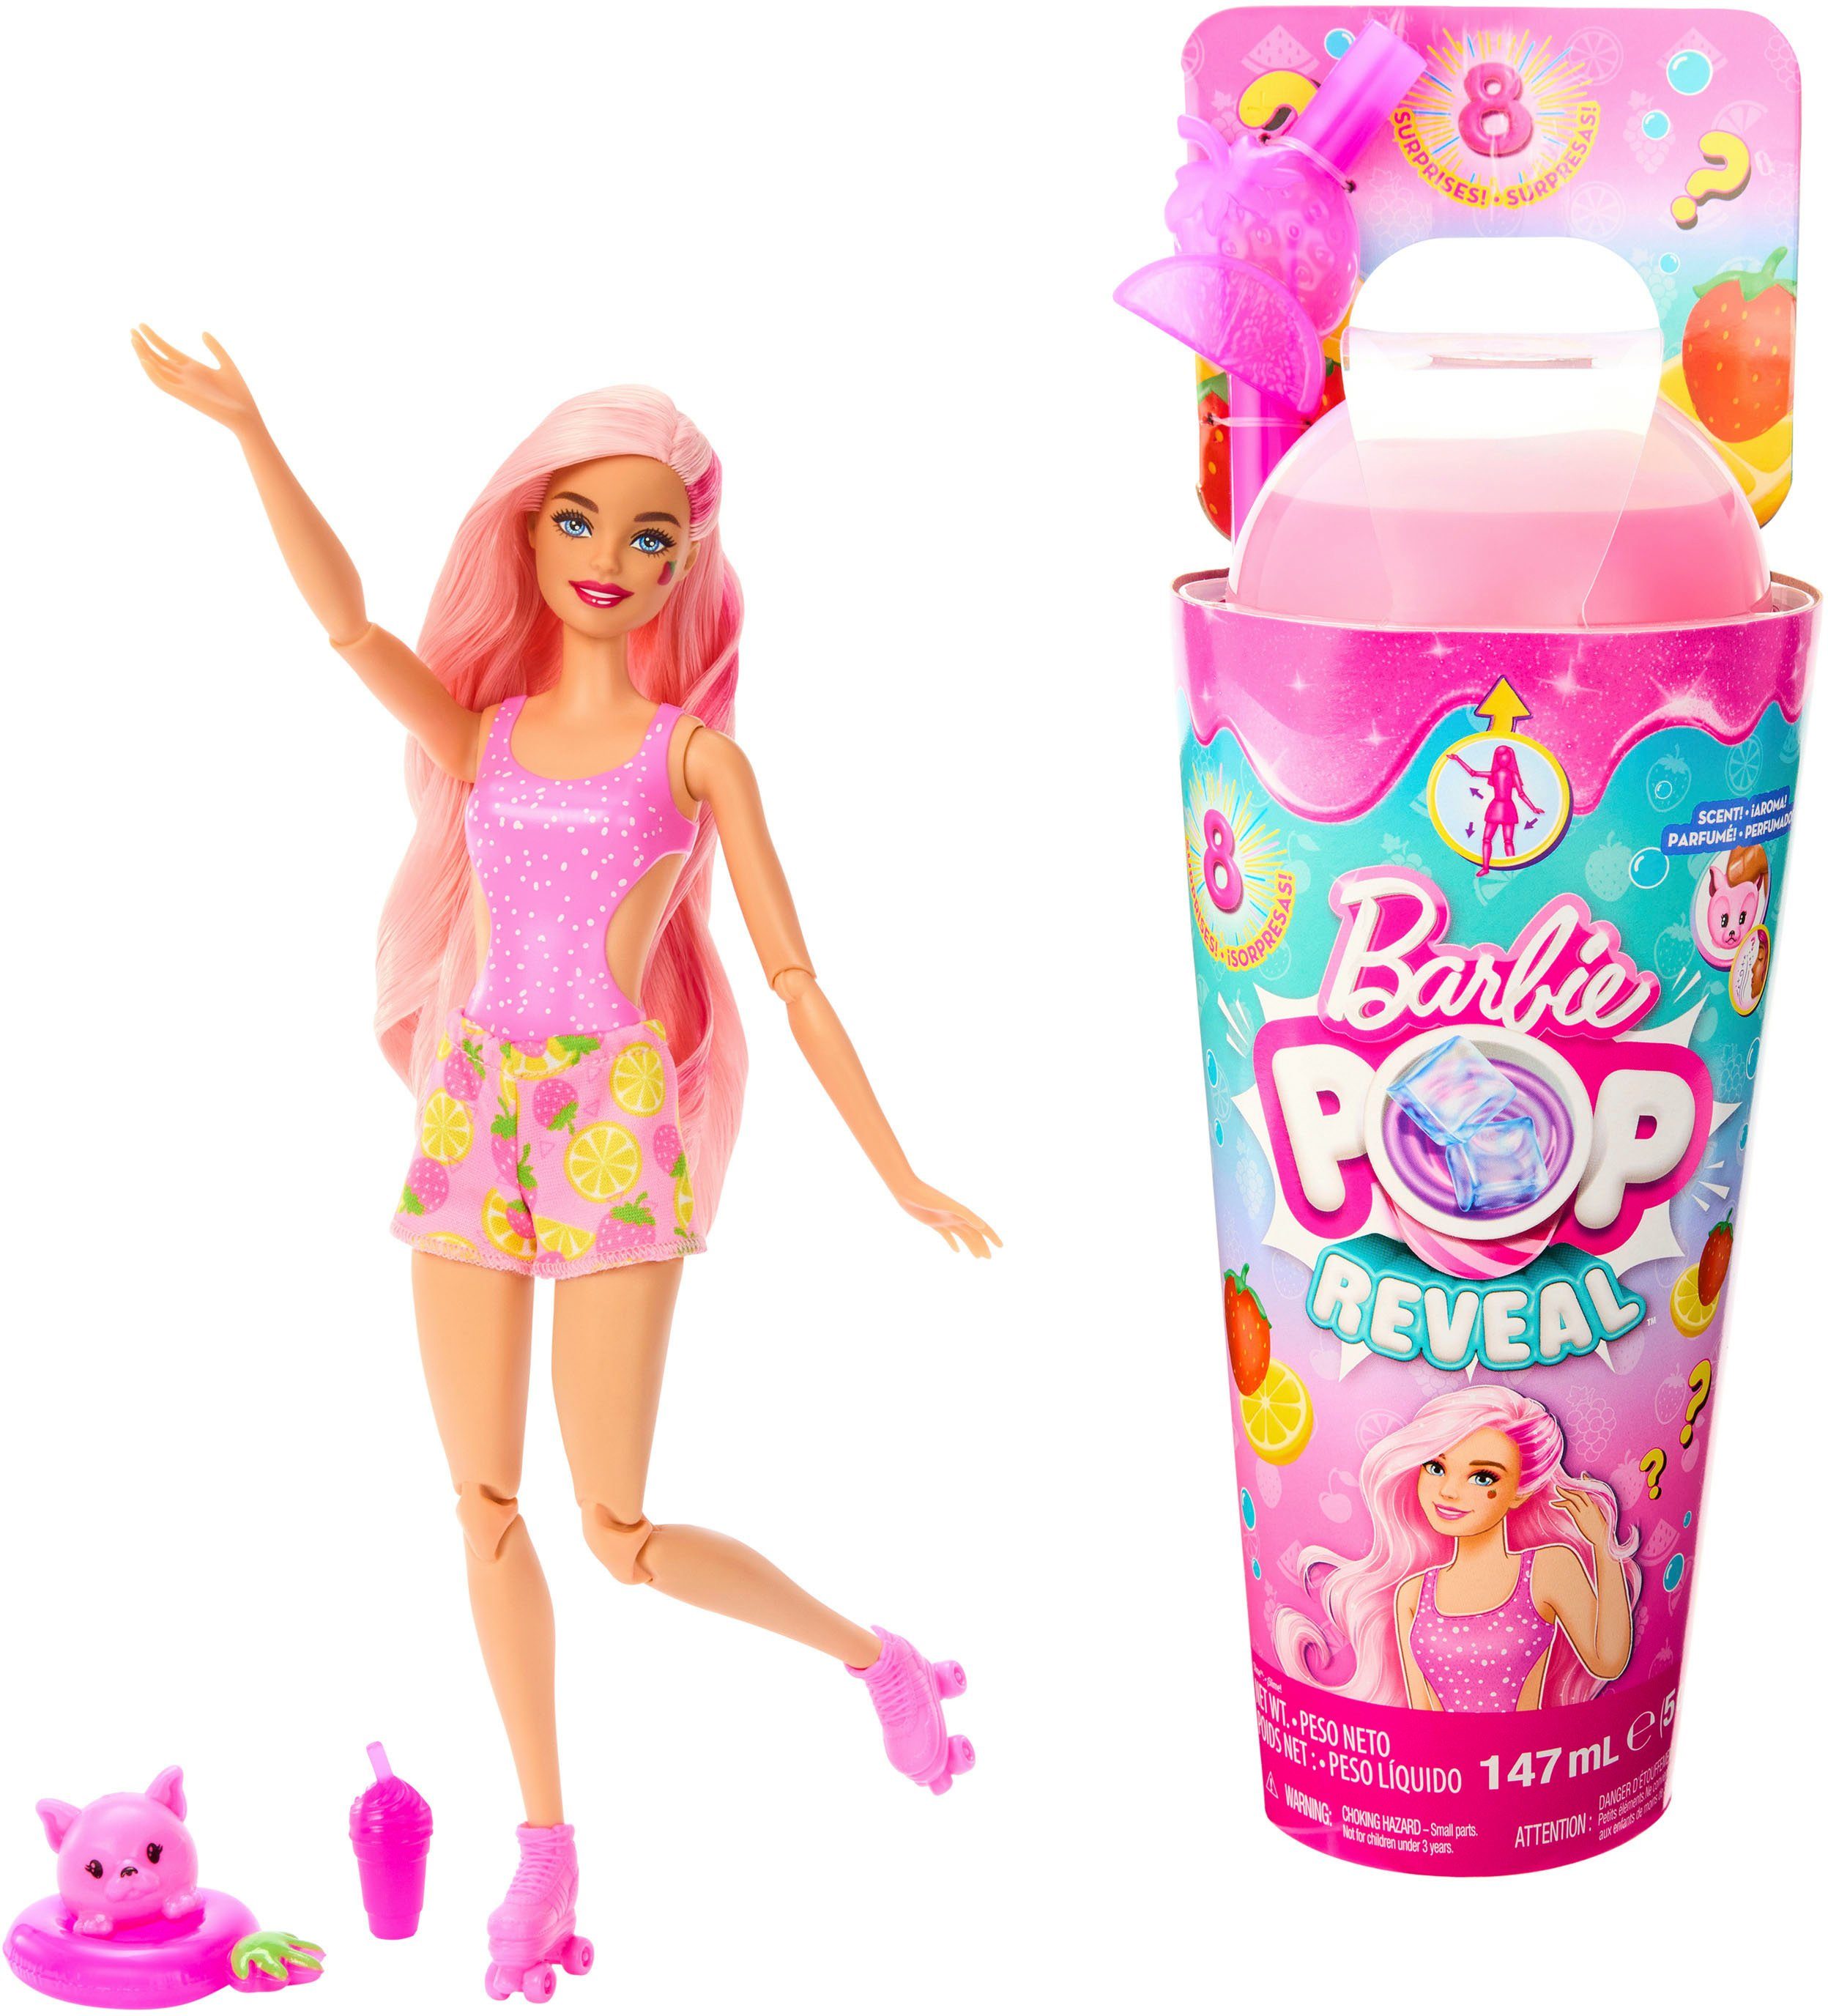 Barbie mit Pop! Anziehpuppe Erdbeerlimonadendesign, Farbwechsel Reveal, Fruit,